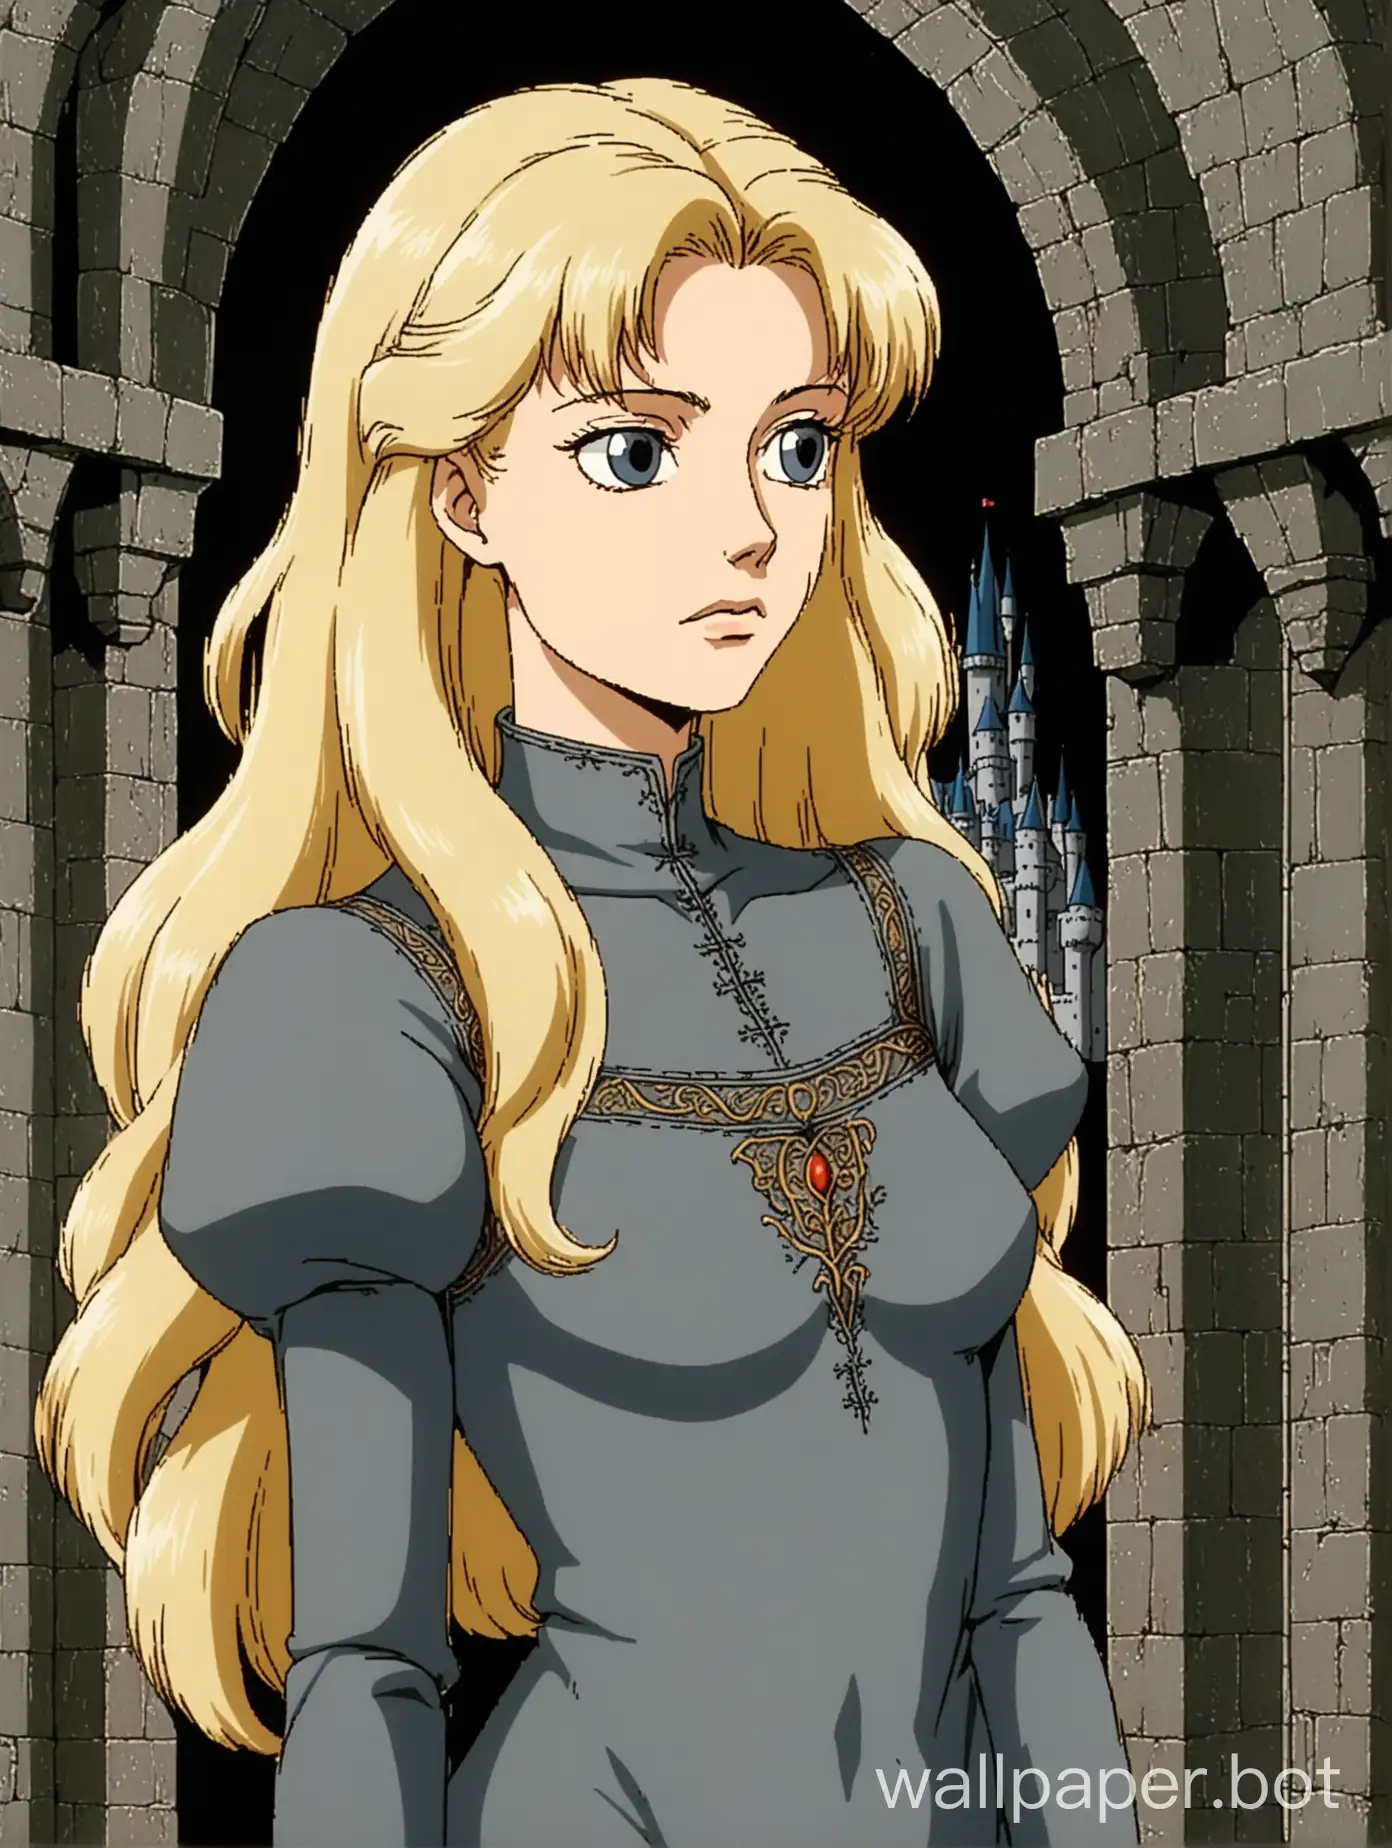 Elegant-WhiteHaired-Woman-in-Medieval-Attire-Retro-Anime-Portrait